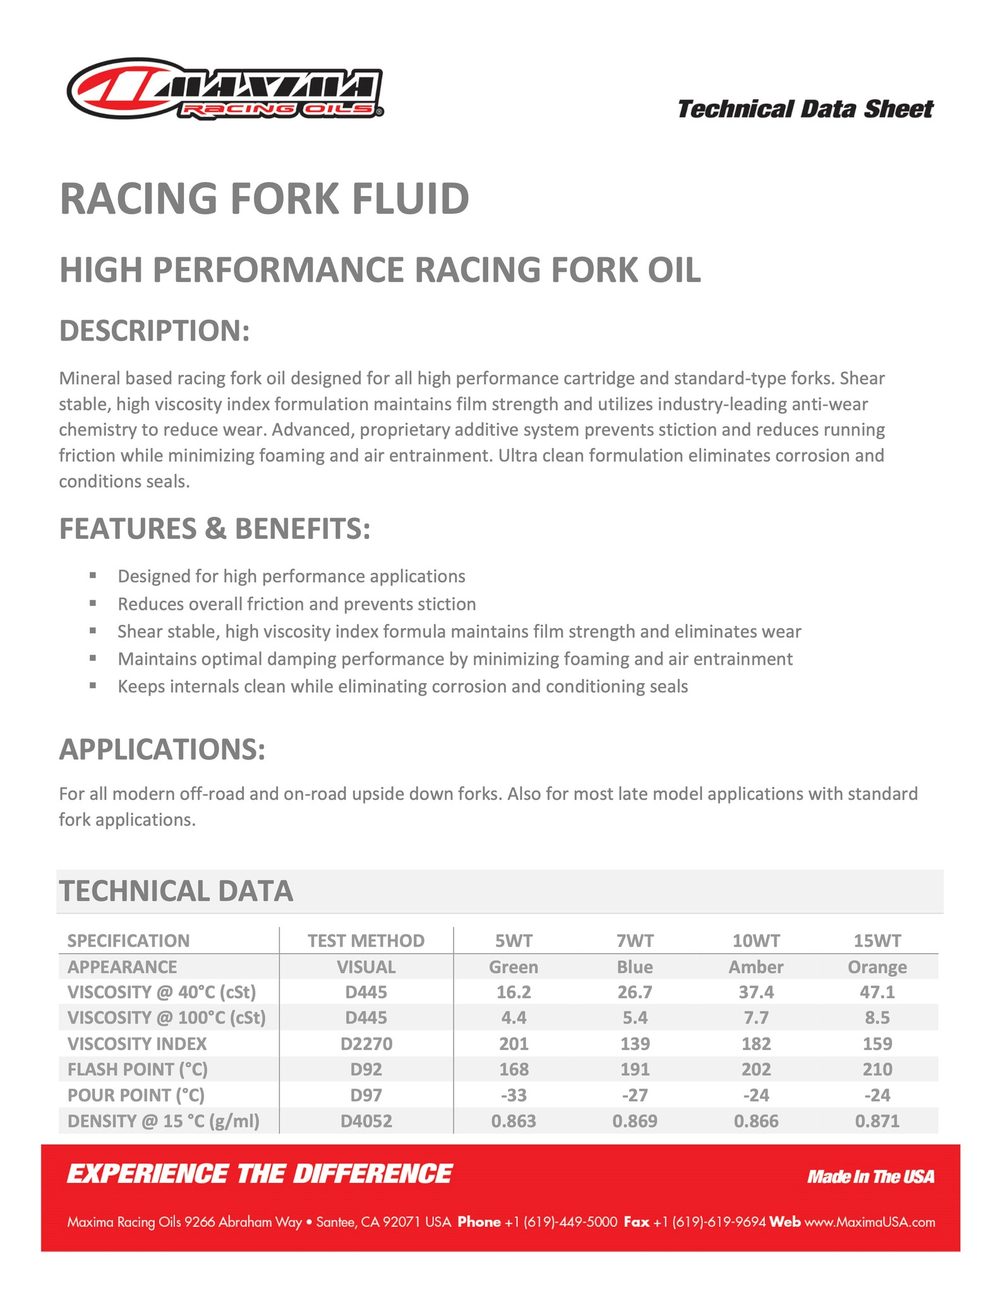 Maxima RACING FORK FLUID (10wt вилочное масло)